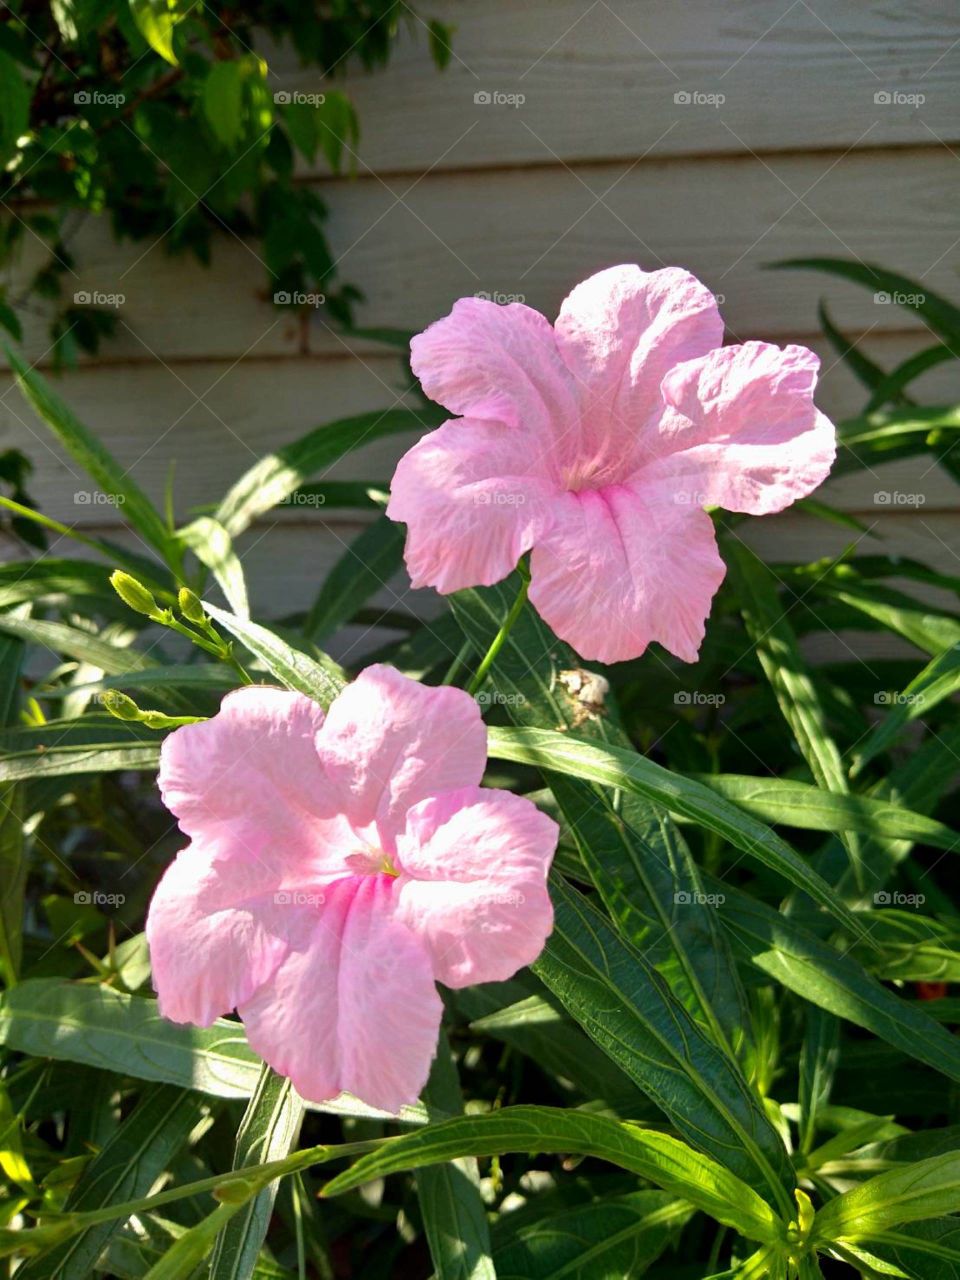 Pink flowers in my garden.